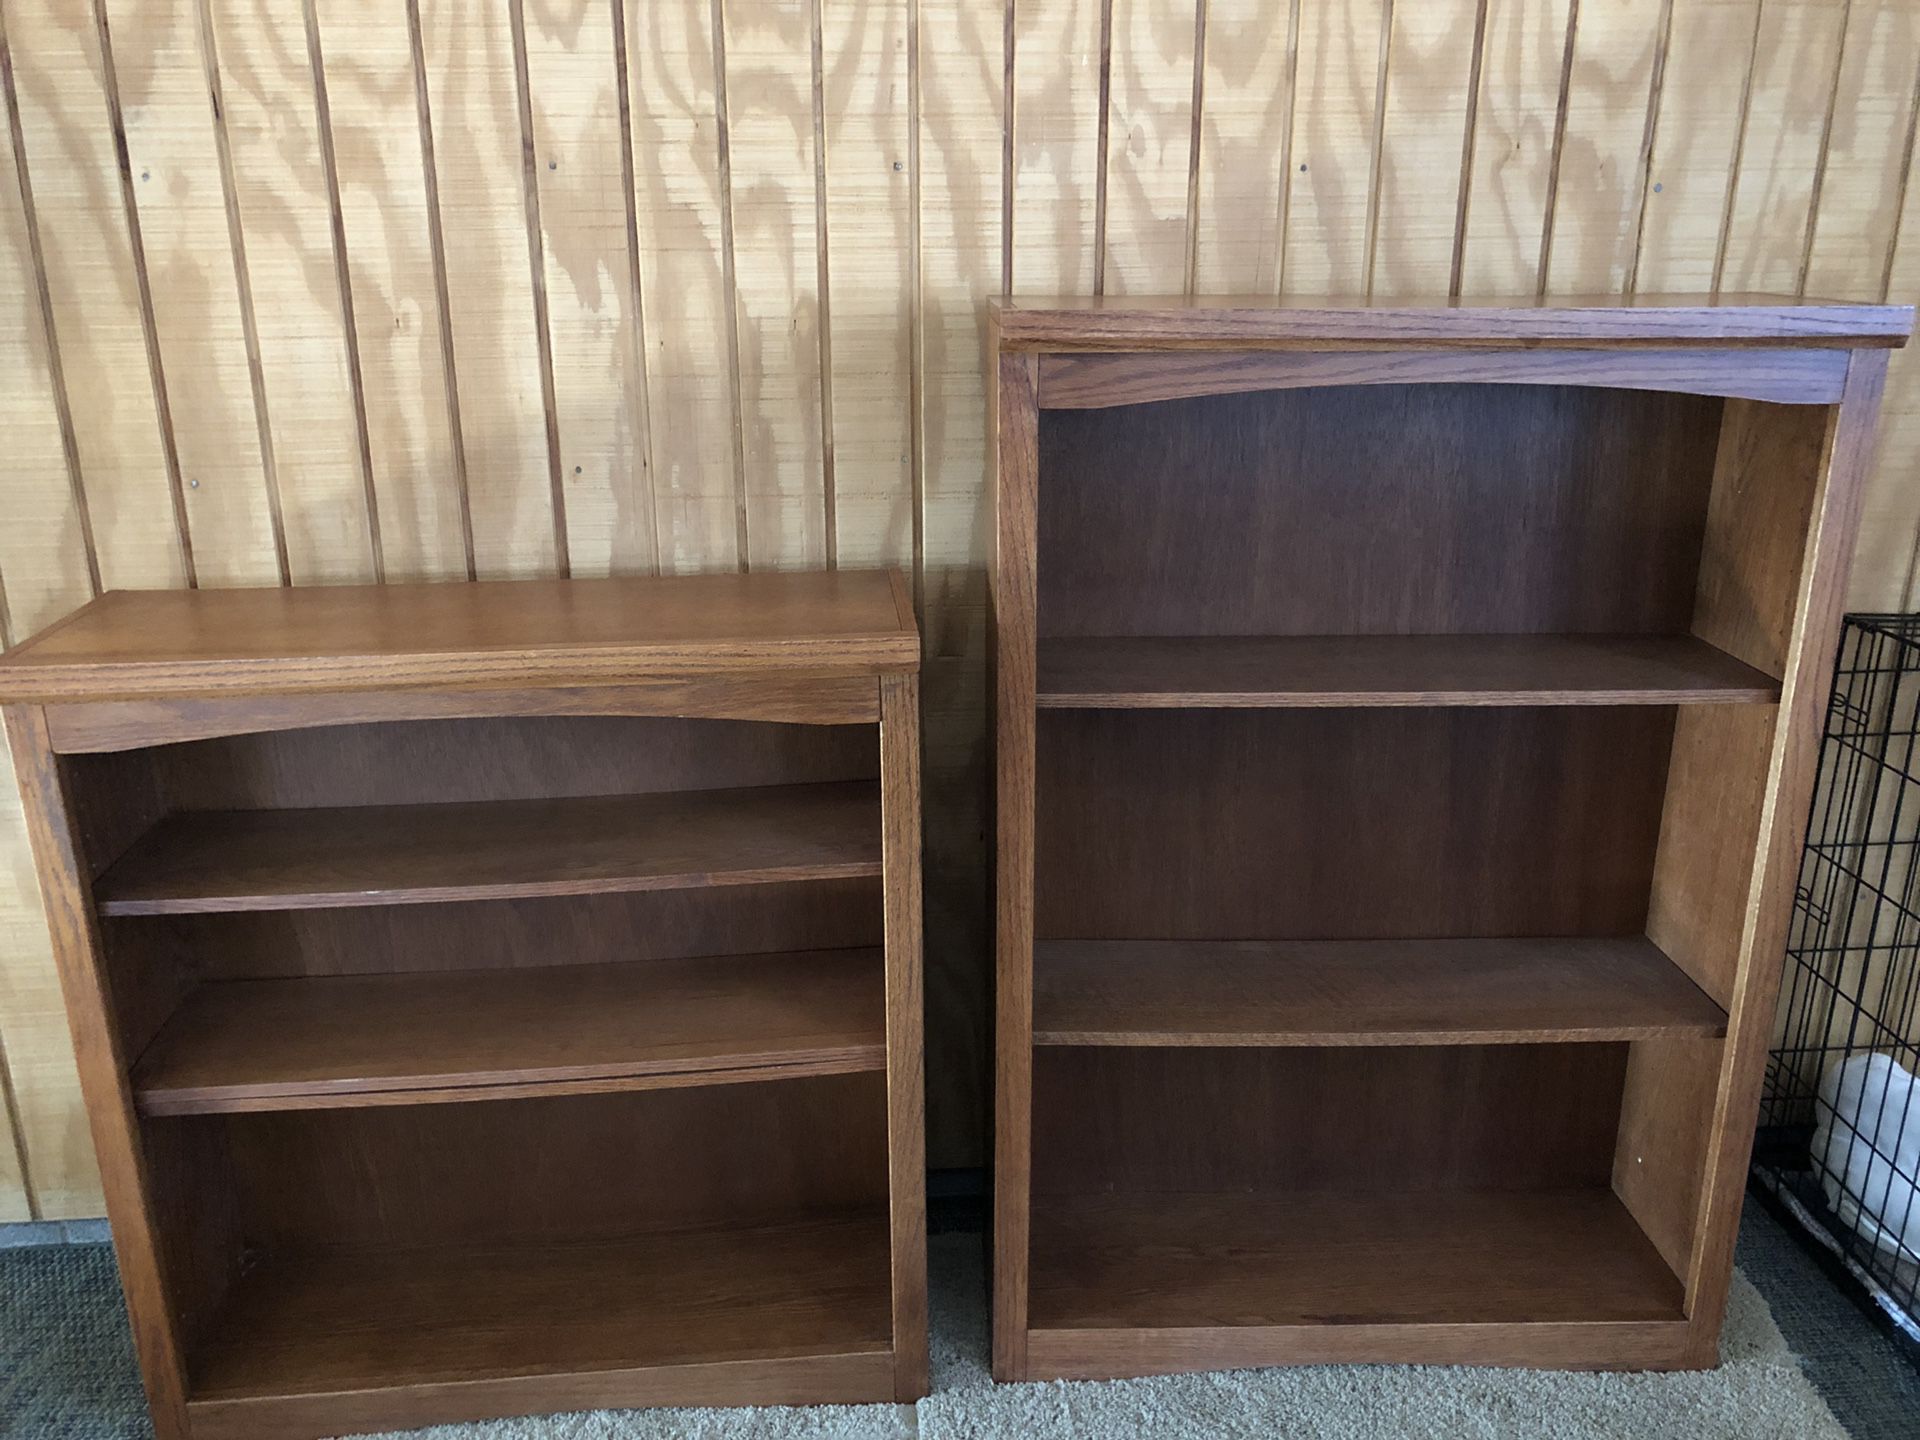 Oak cabinets/storage shelves